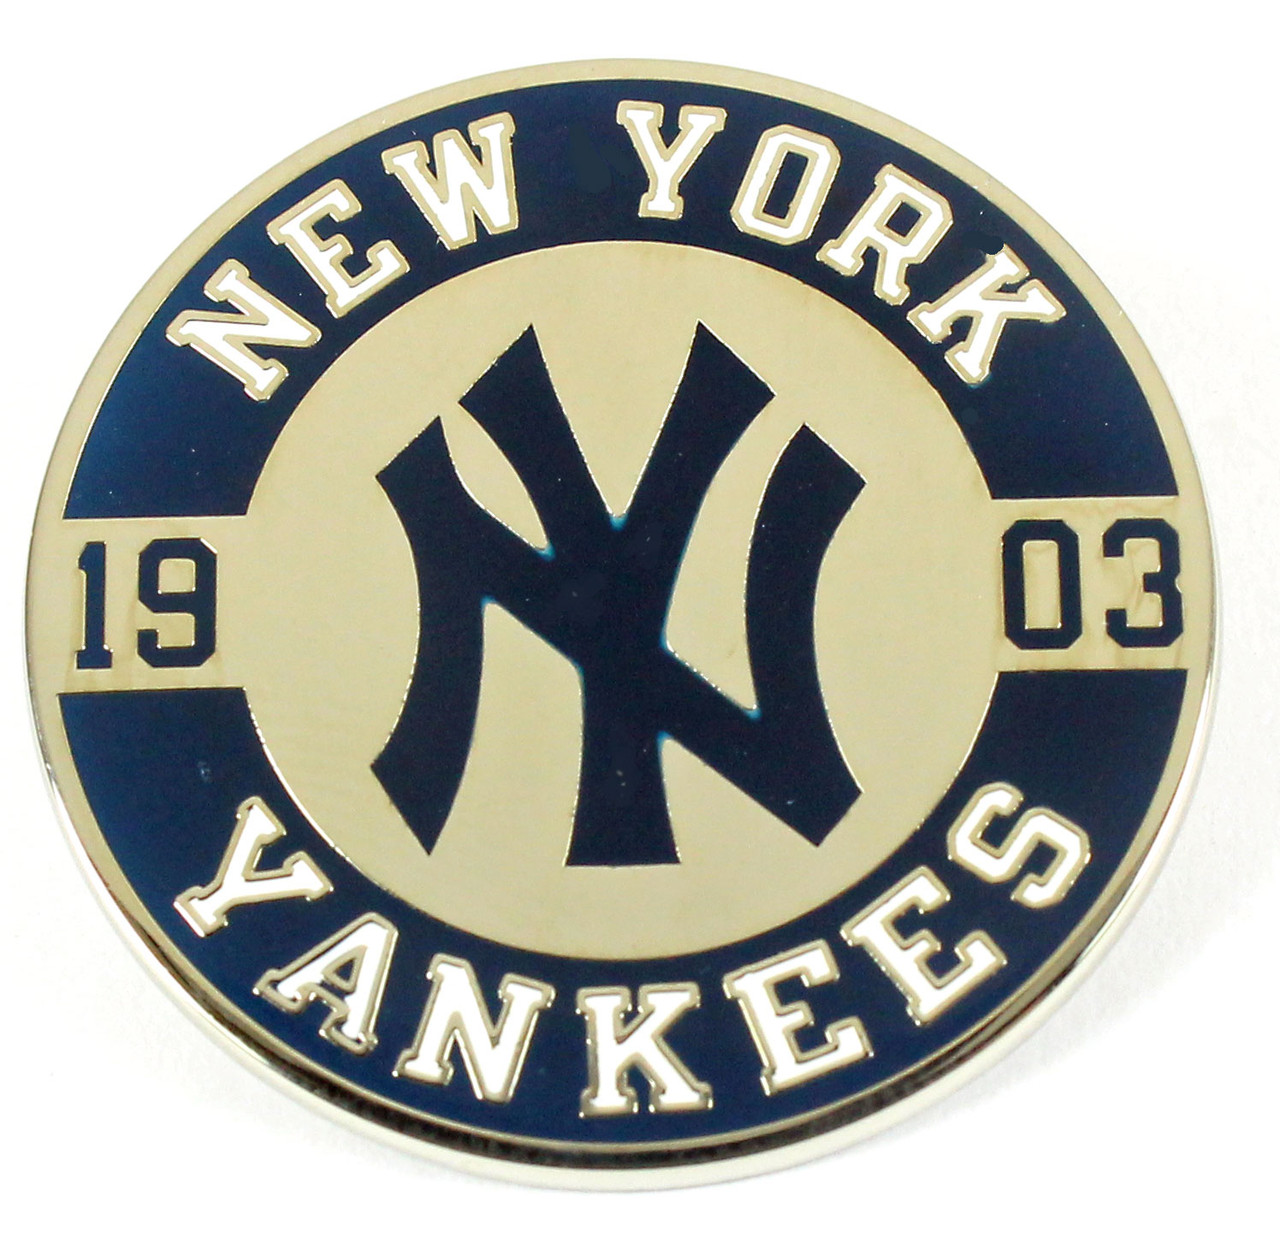 MLB New York Yankees Crossbody Purse-patch/vintage New York 